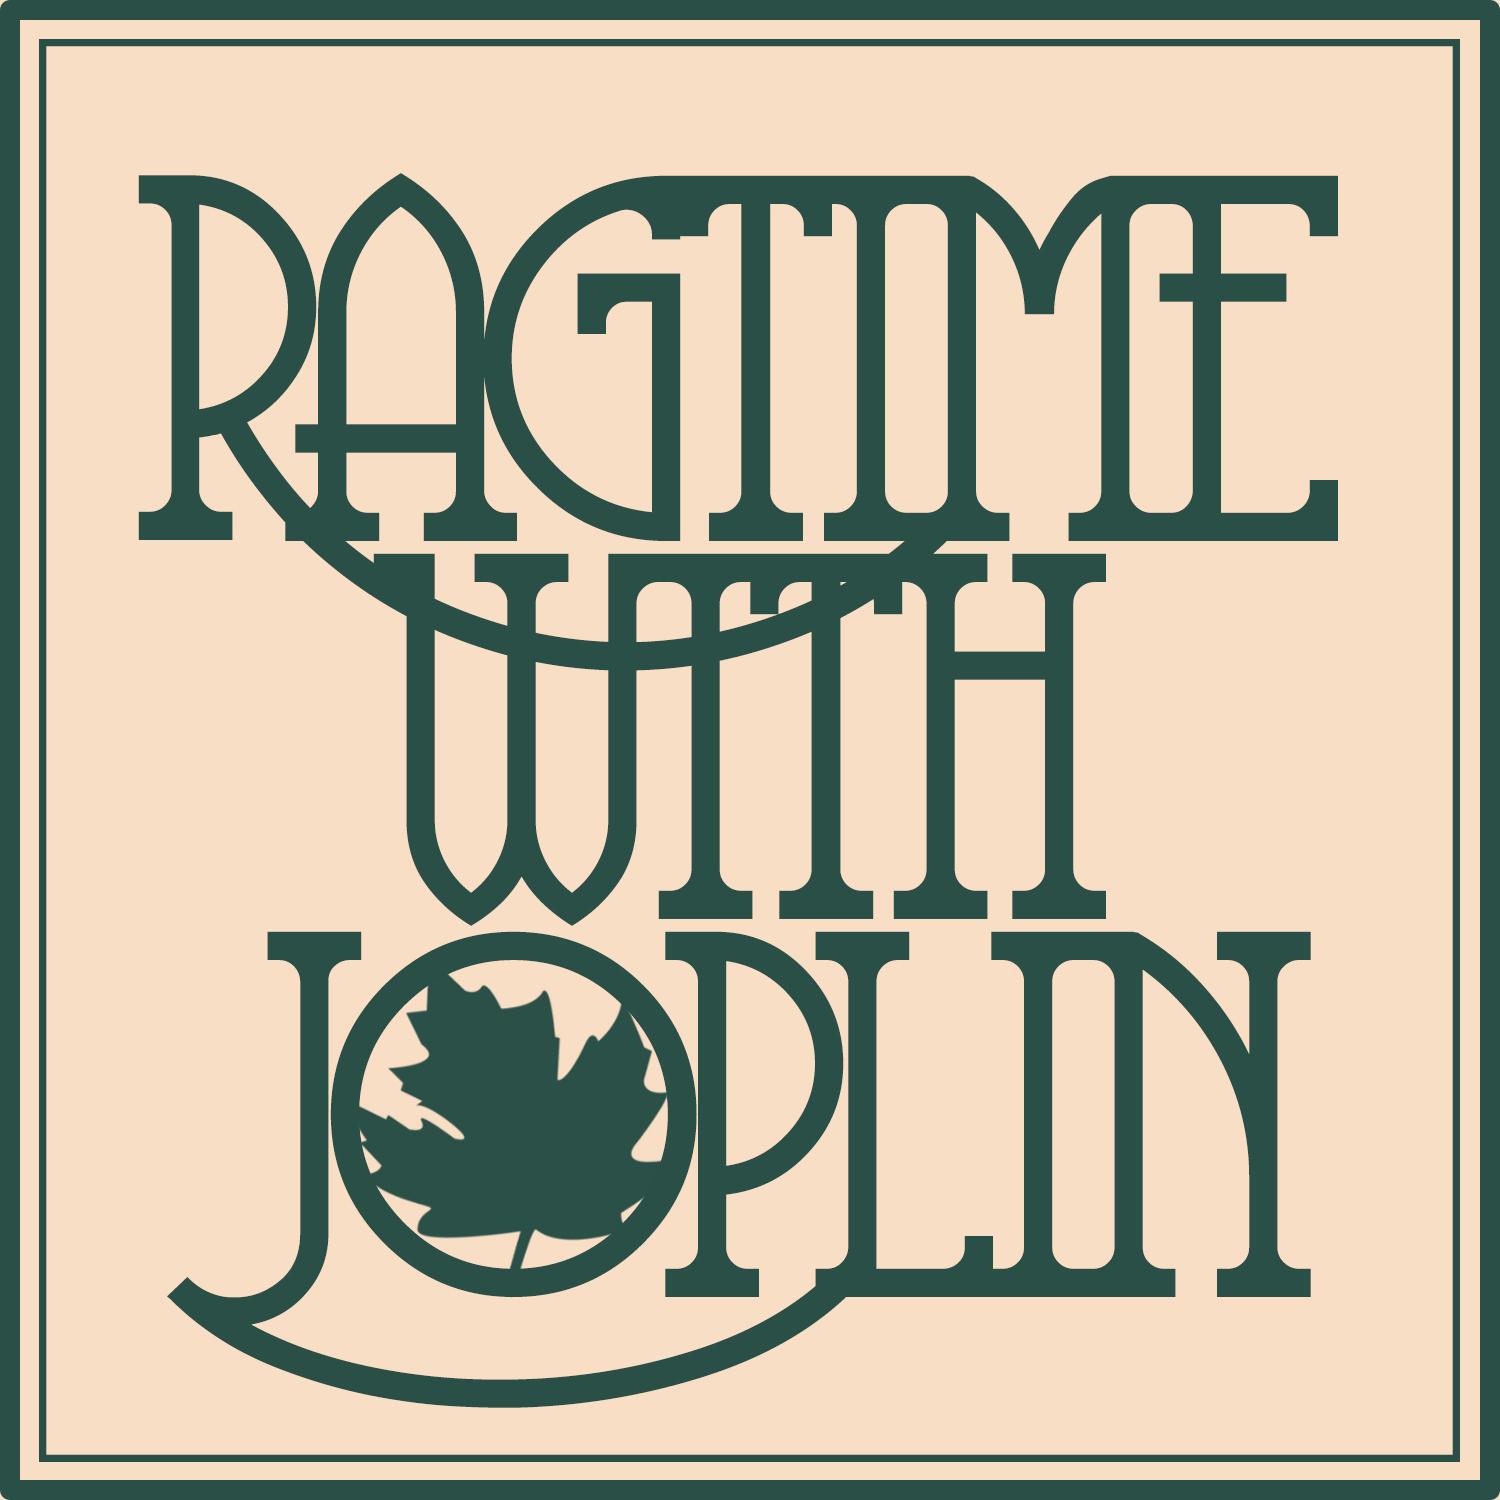 Ragtime with Joplin